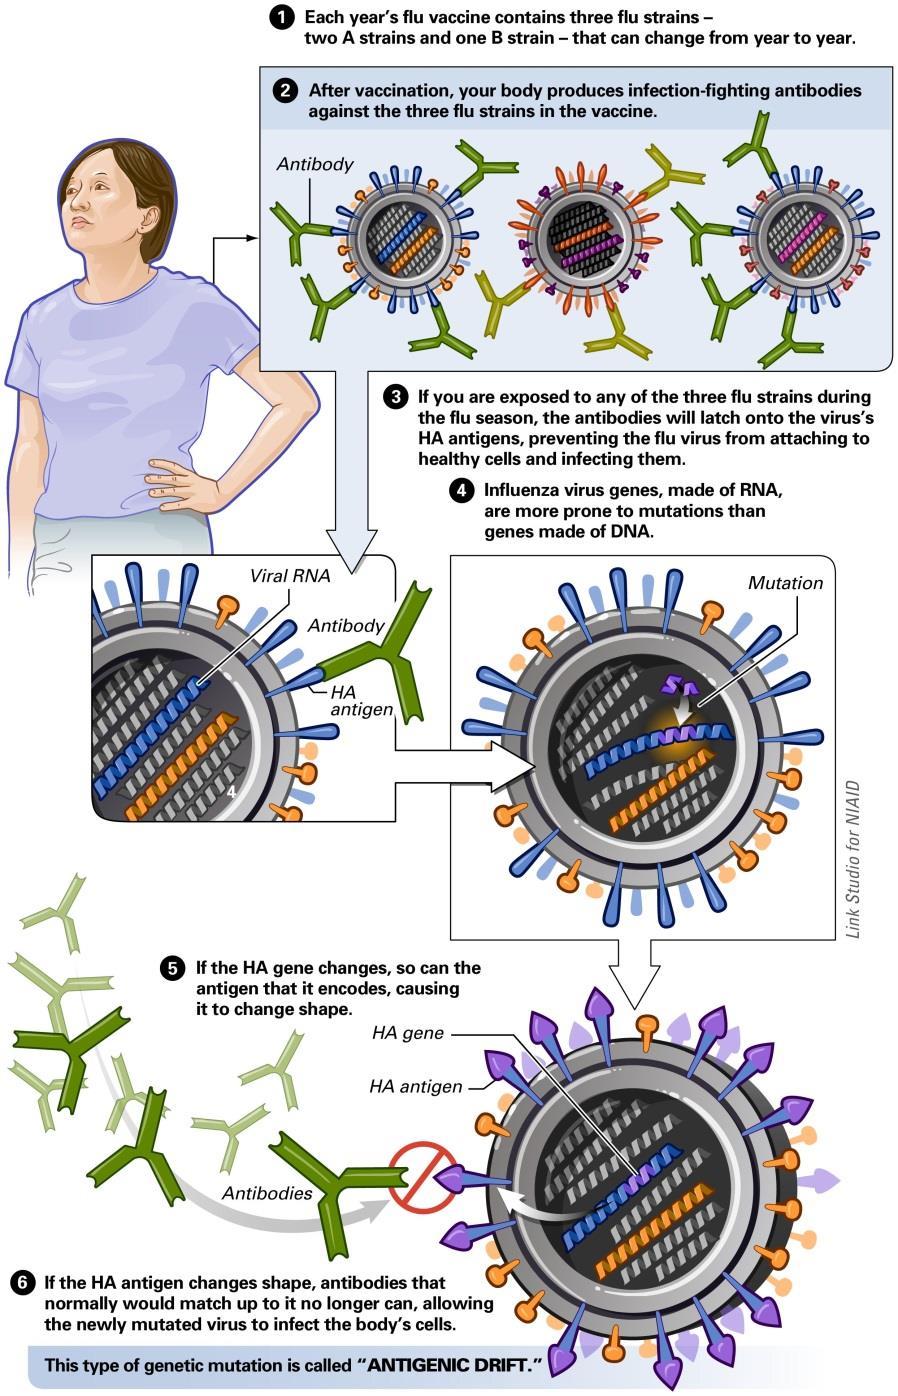 Influenza Virus Epidemic: Antigenic Drift epidemics every 1-3 years influenza A mutation antigenic drift small continuous